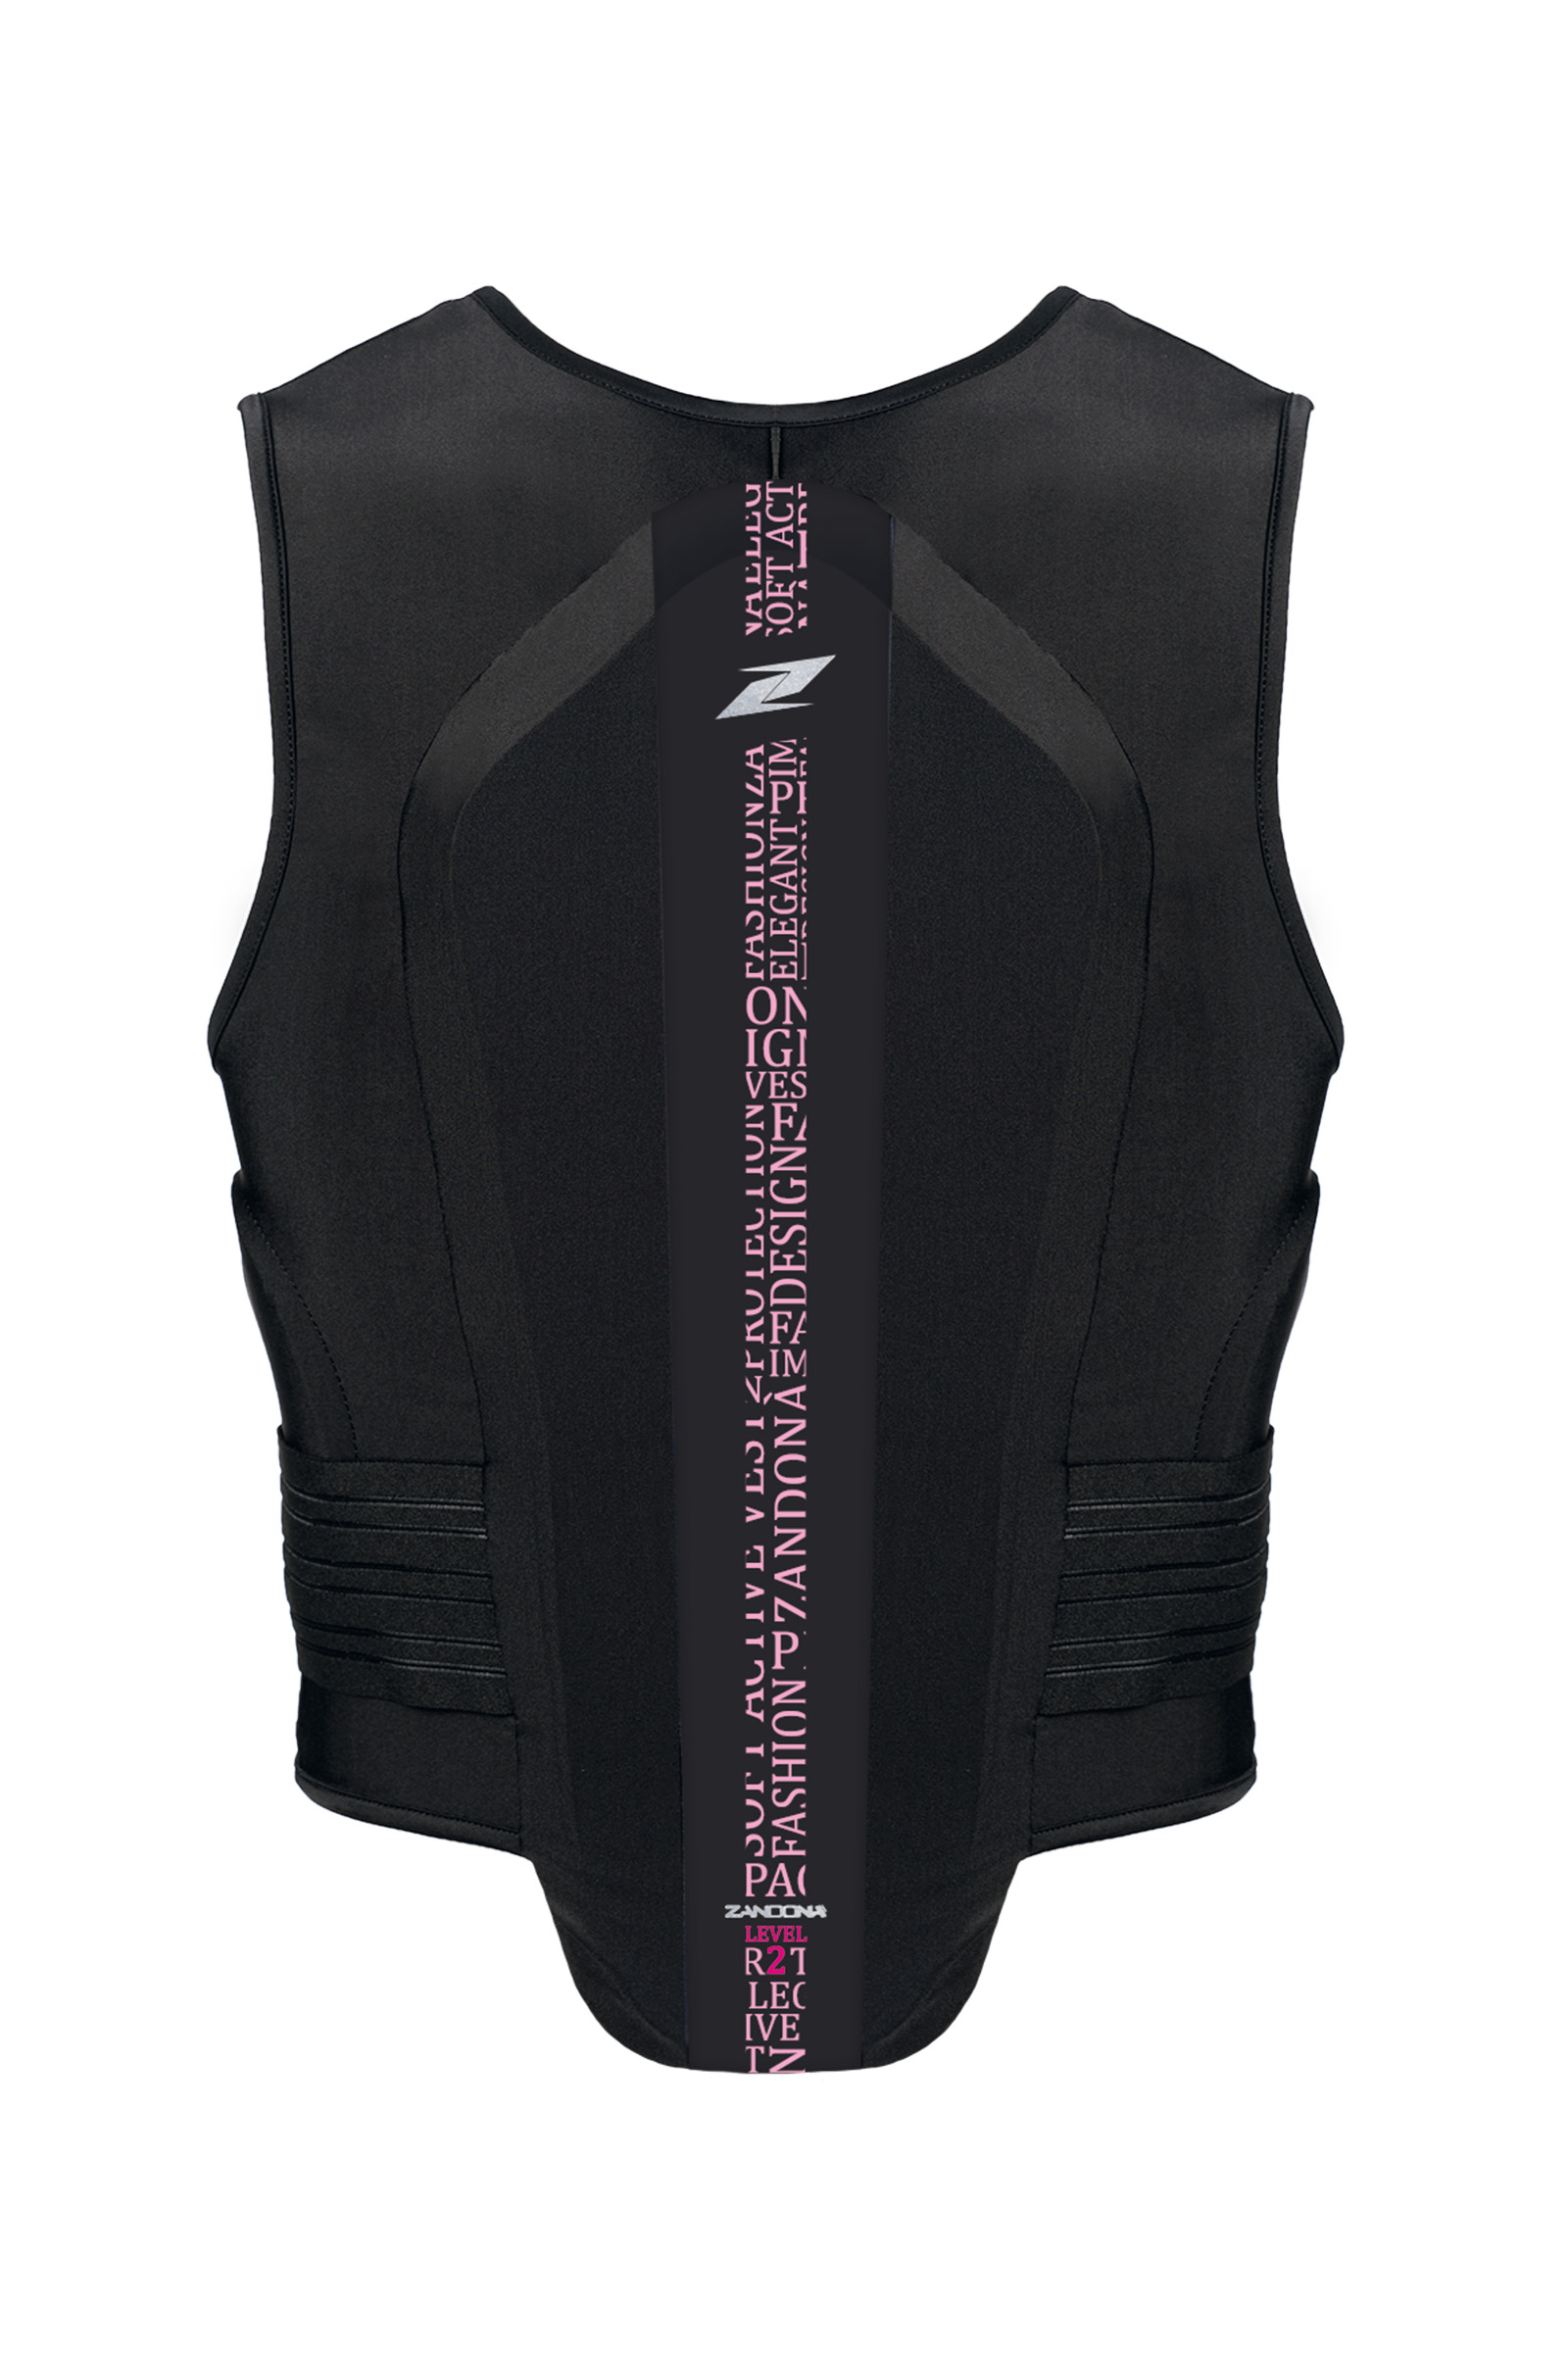 Protector Buy (158-167cm) Pro Zandona Back x6 Vest Soft